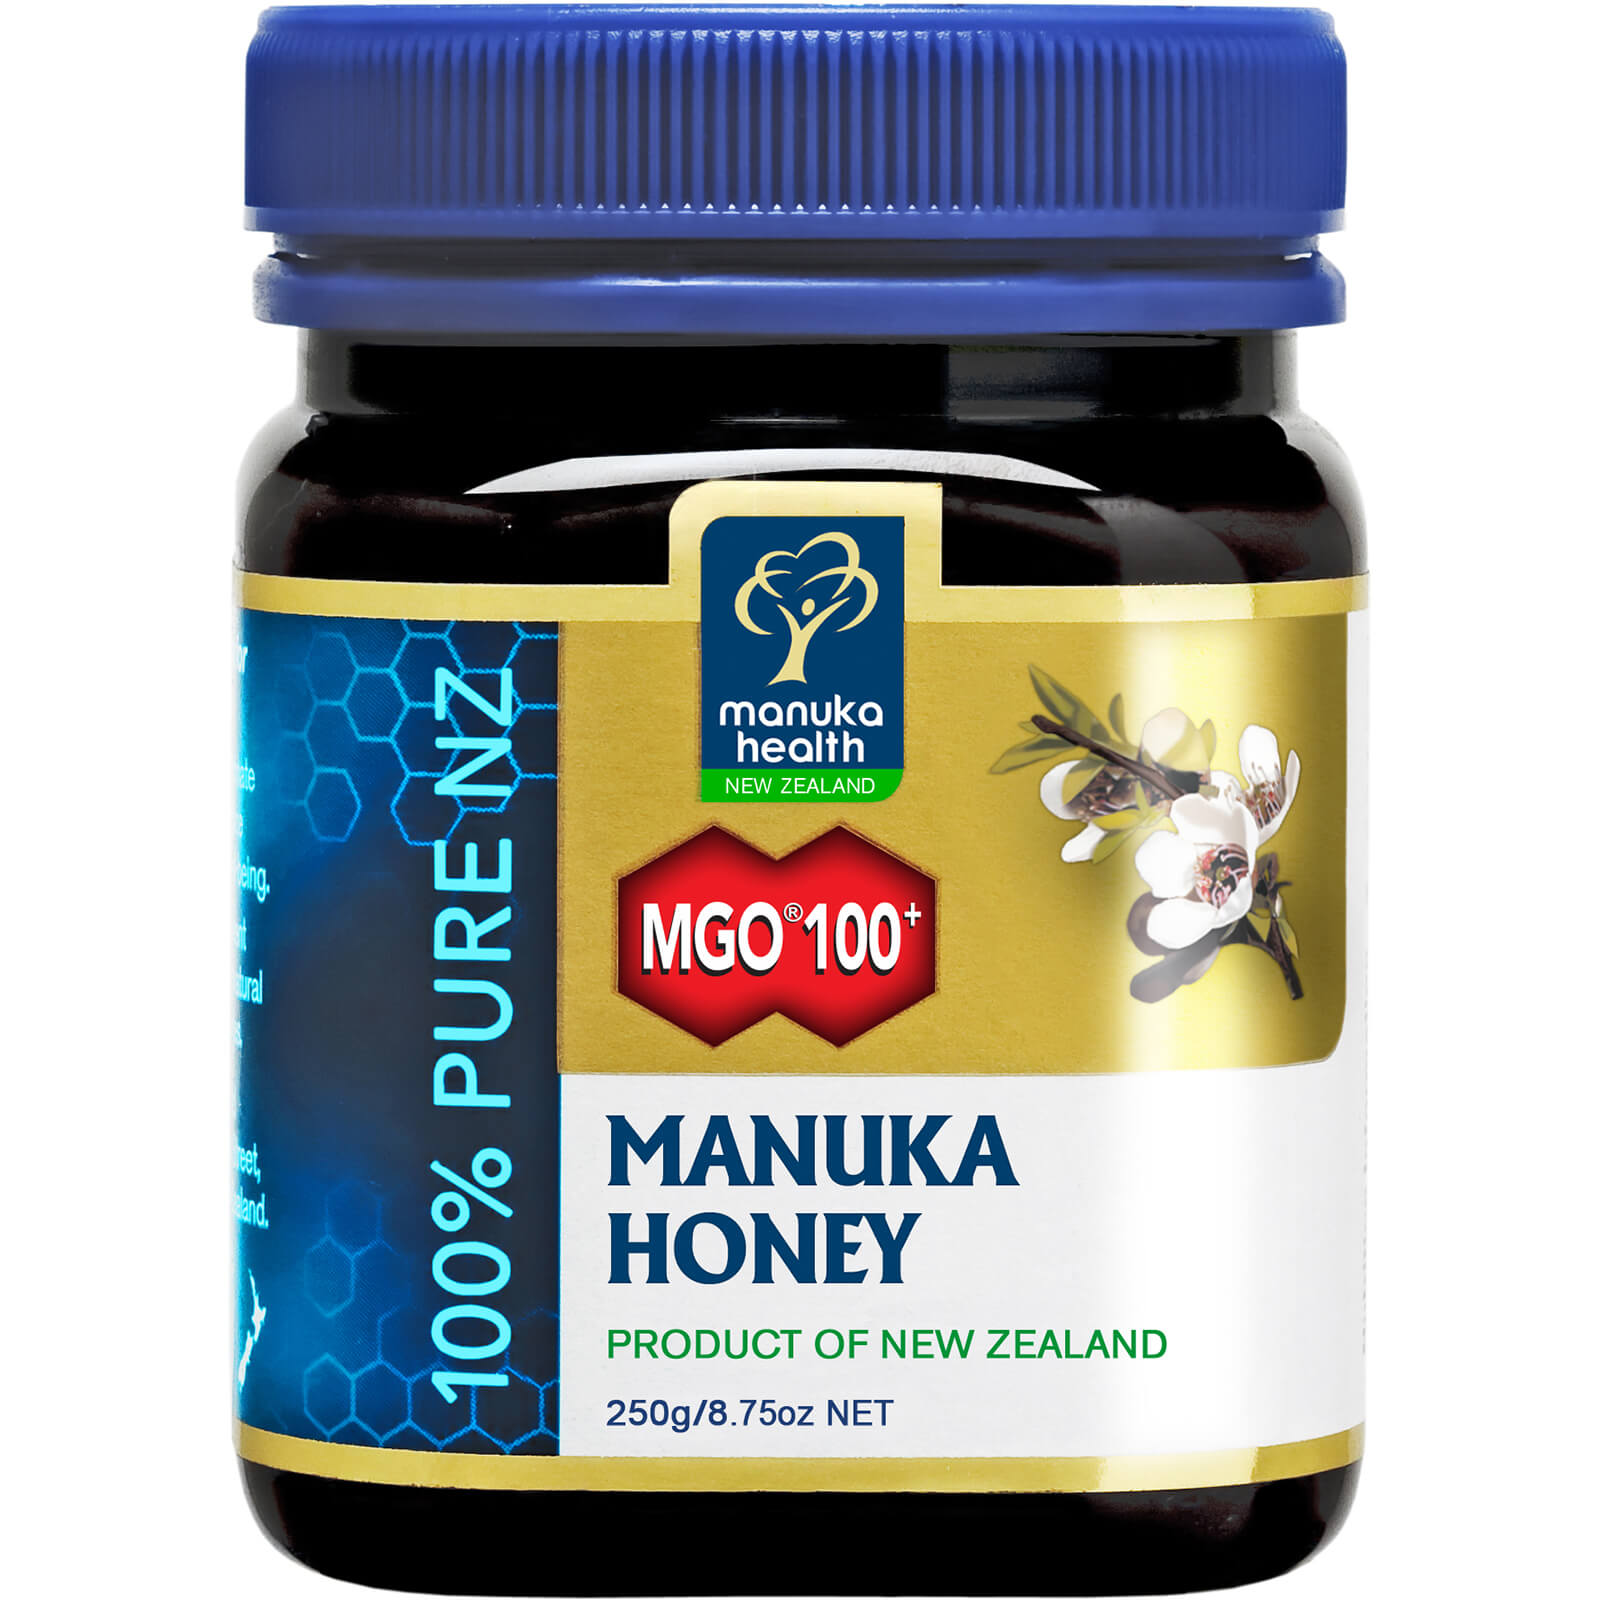 MGO 100+ Pure Manuka Honey Blend - 250G